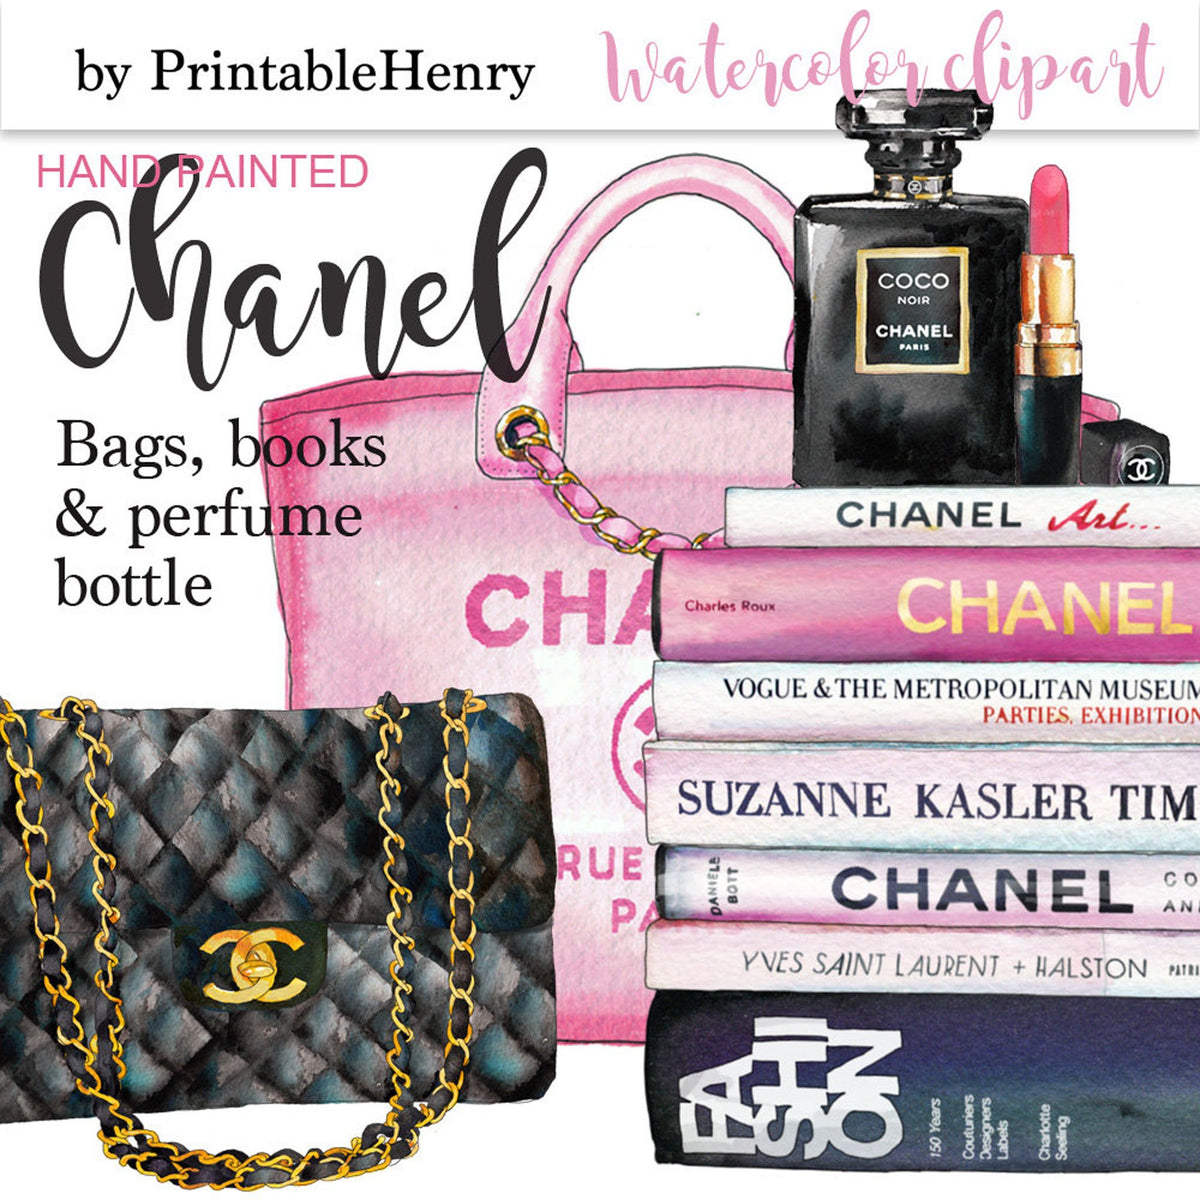 Book, handbags and perfume fashion watercolor clipart png download